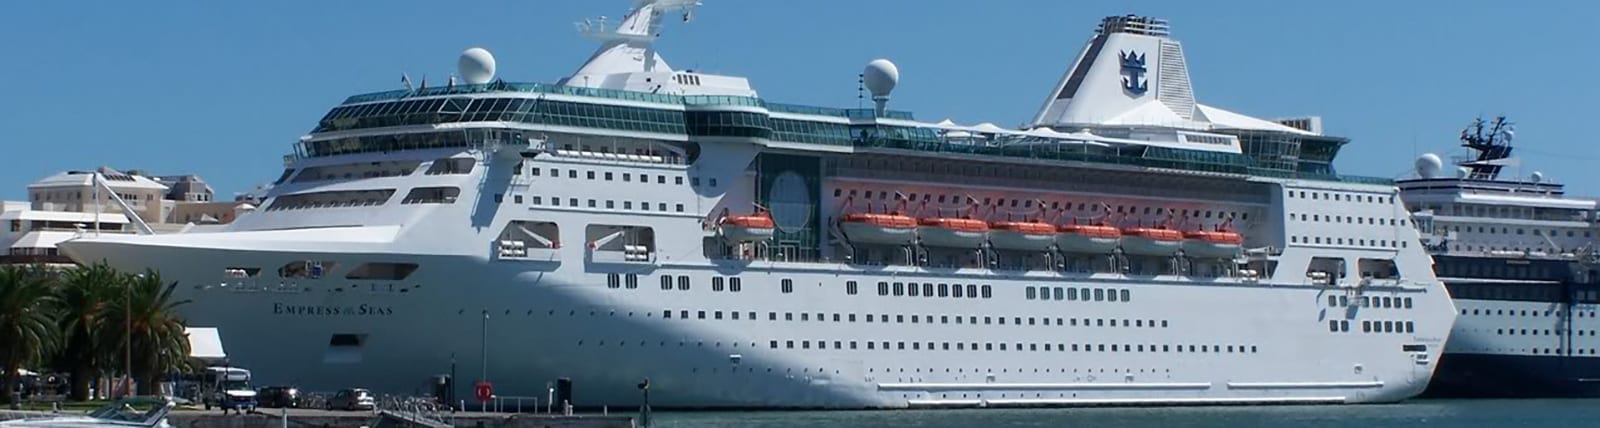 Empress of the Seas cruise